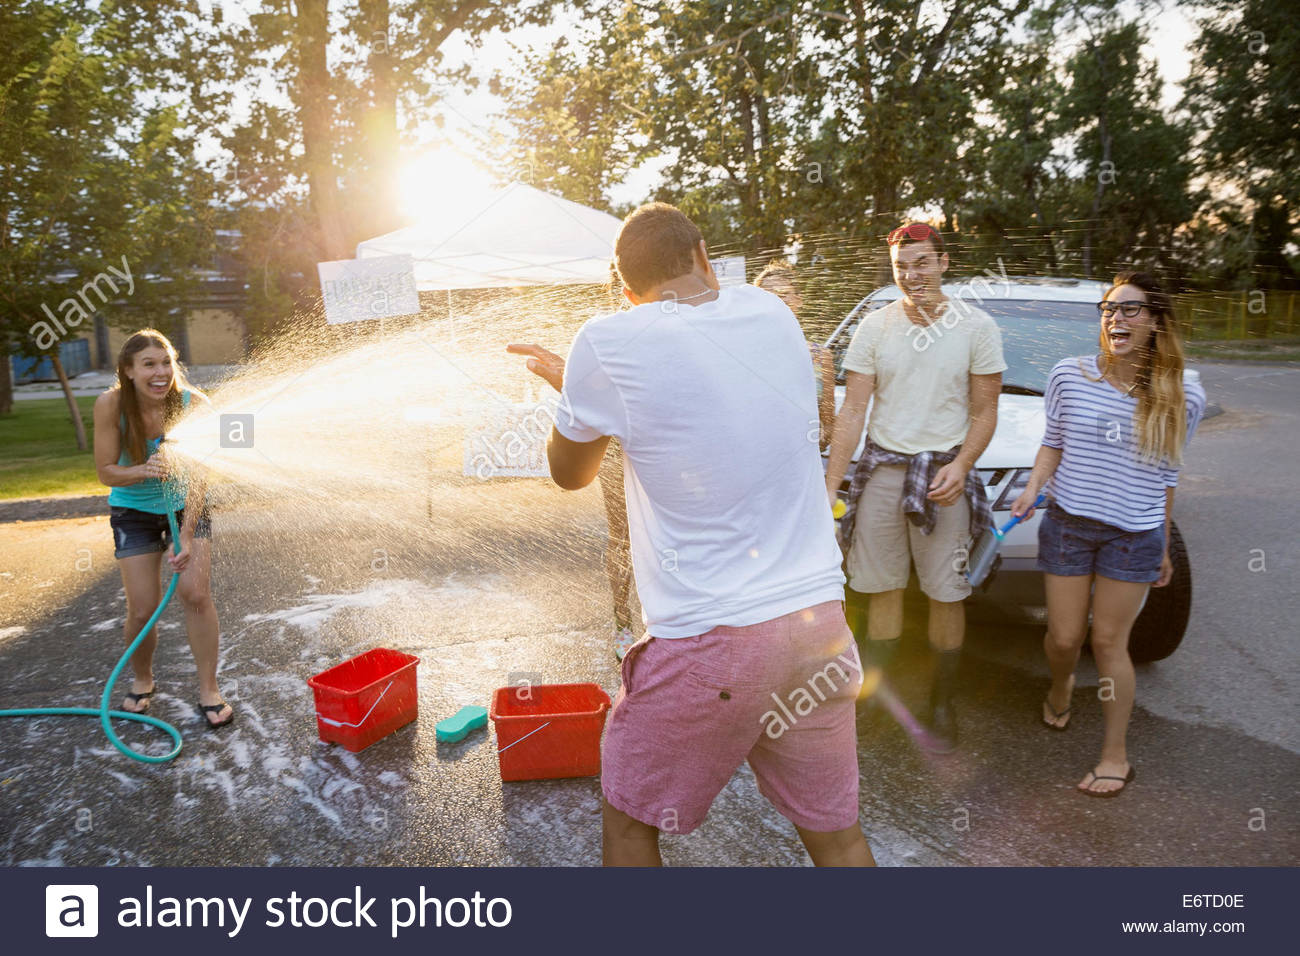 Woman spraying man with hose at car wash Stock Photo